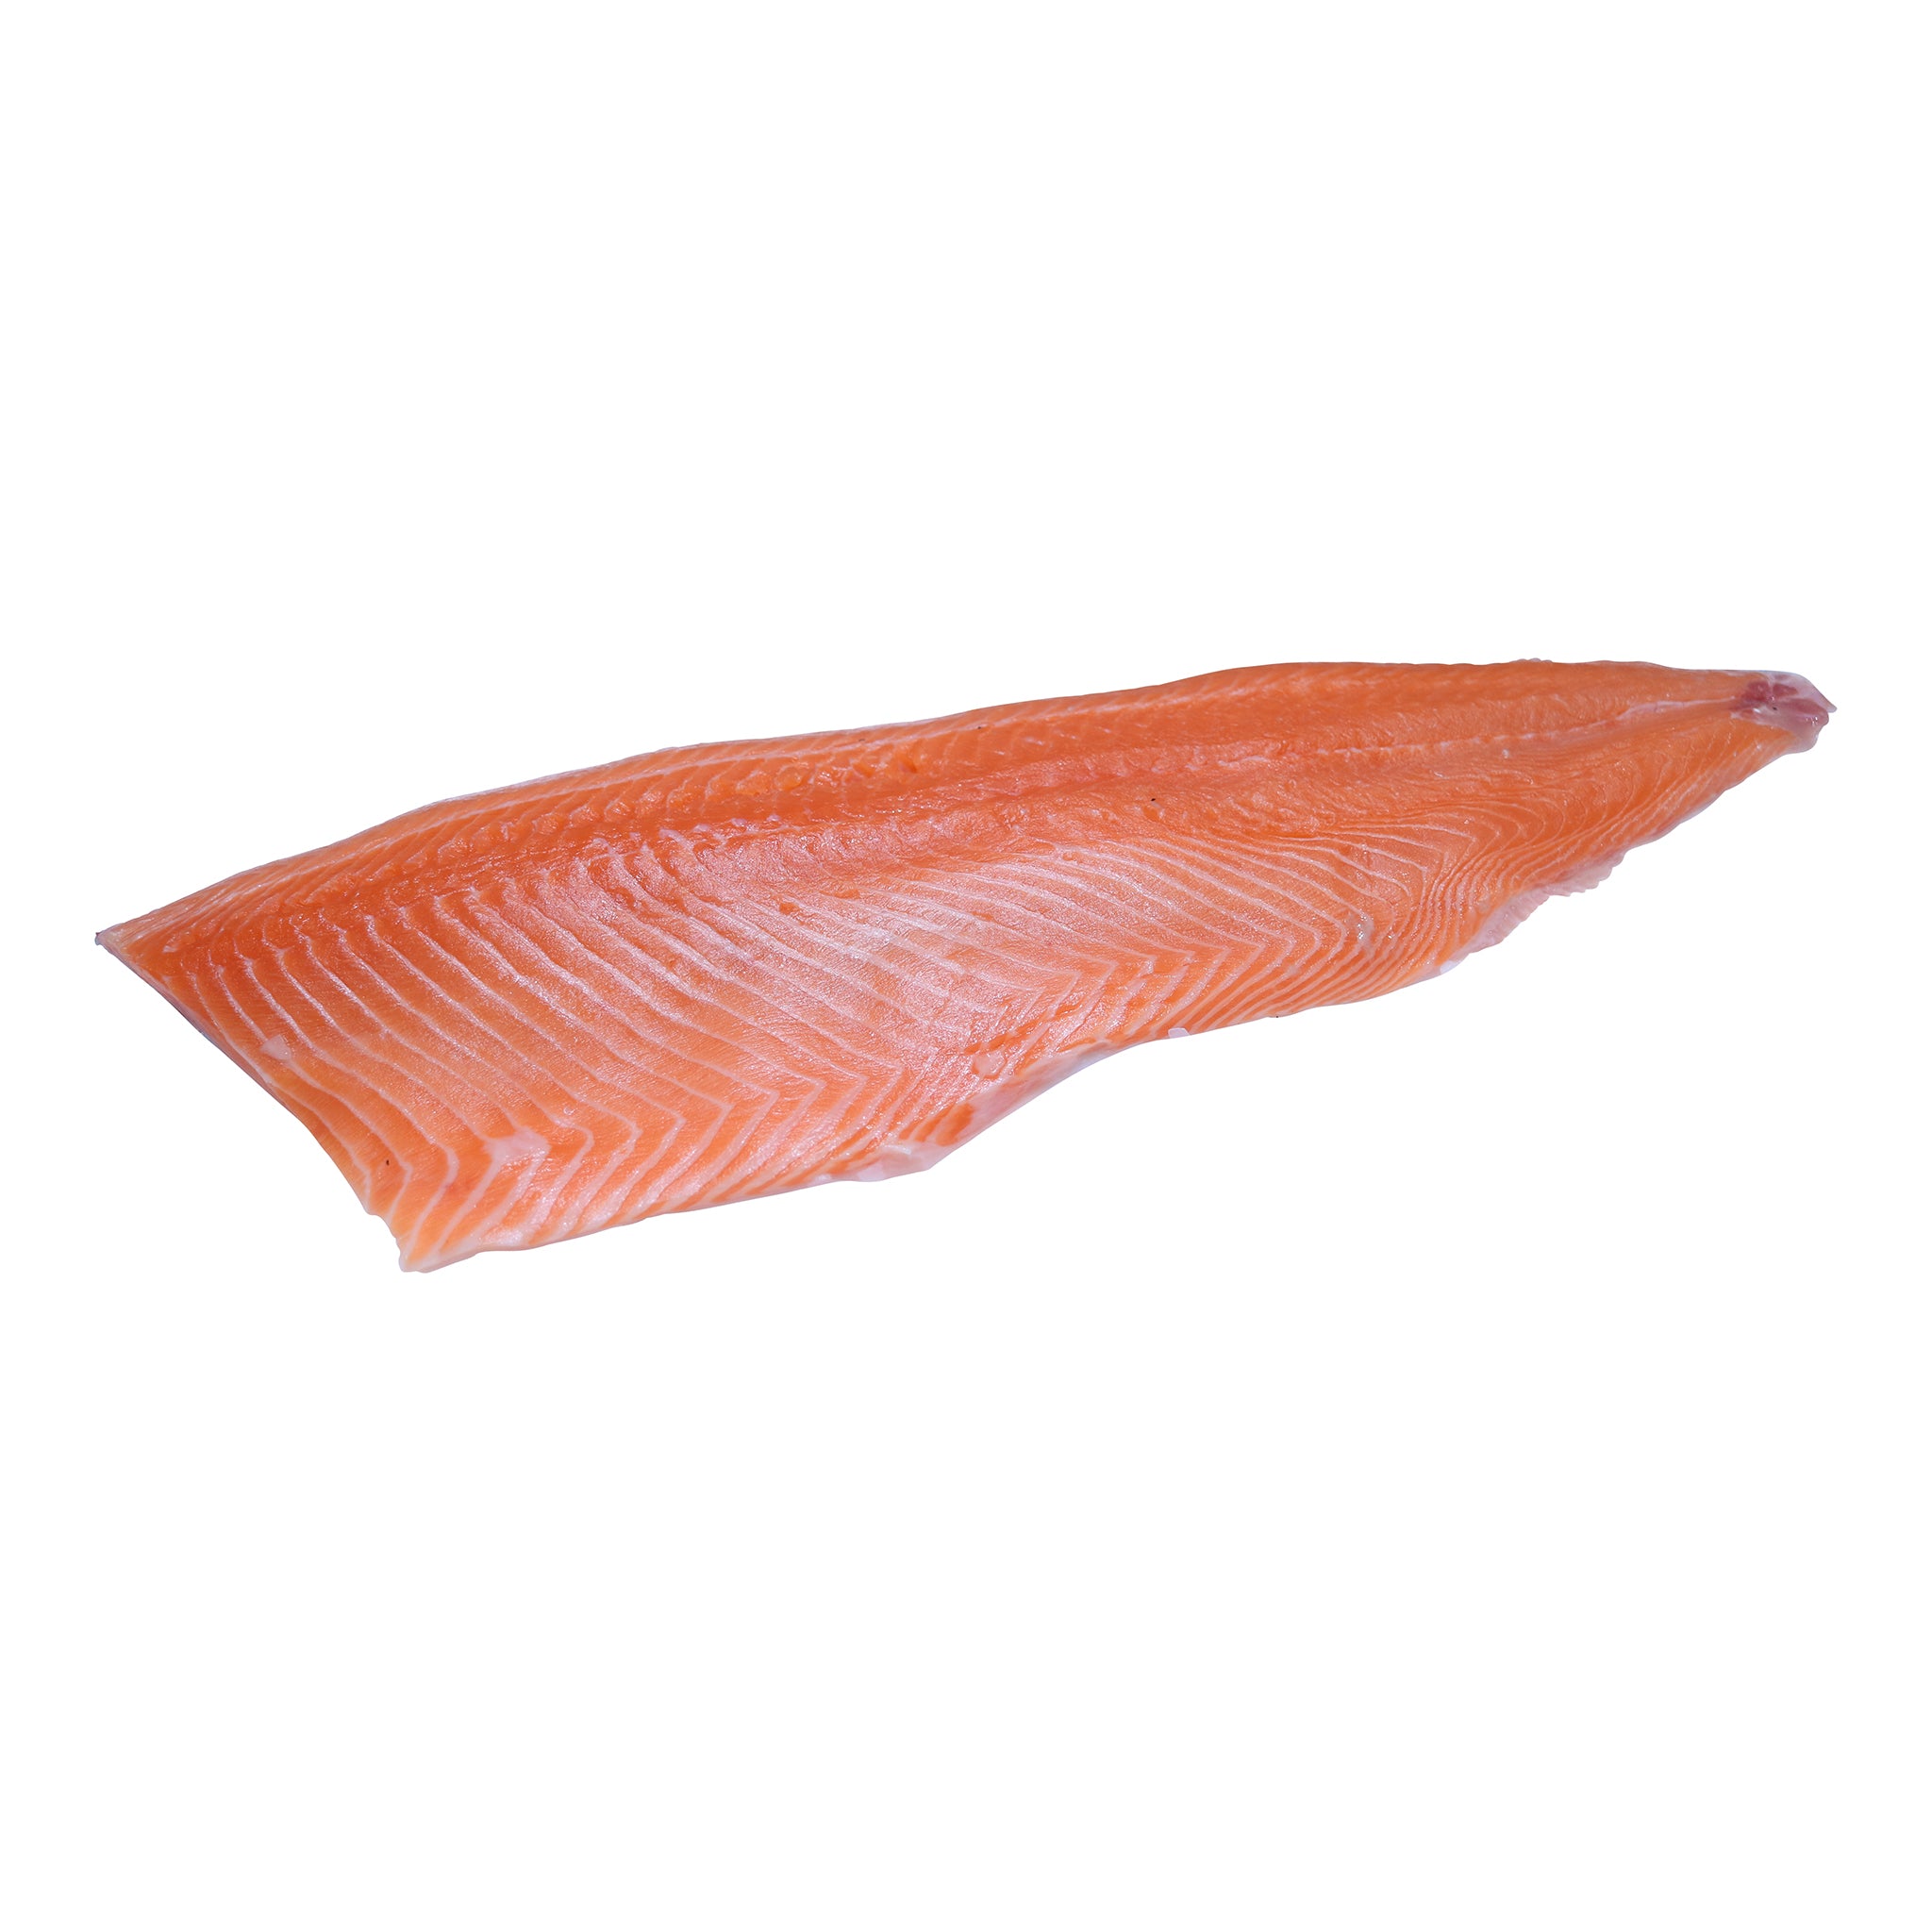 Atlantic Salmon side